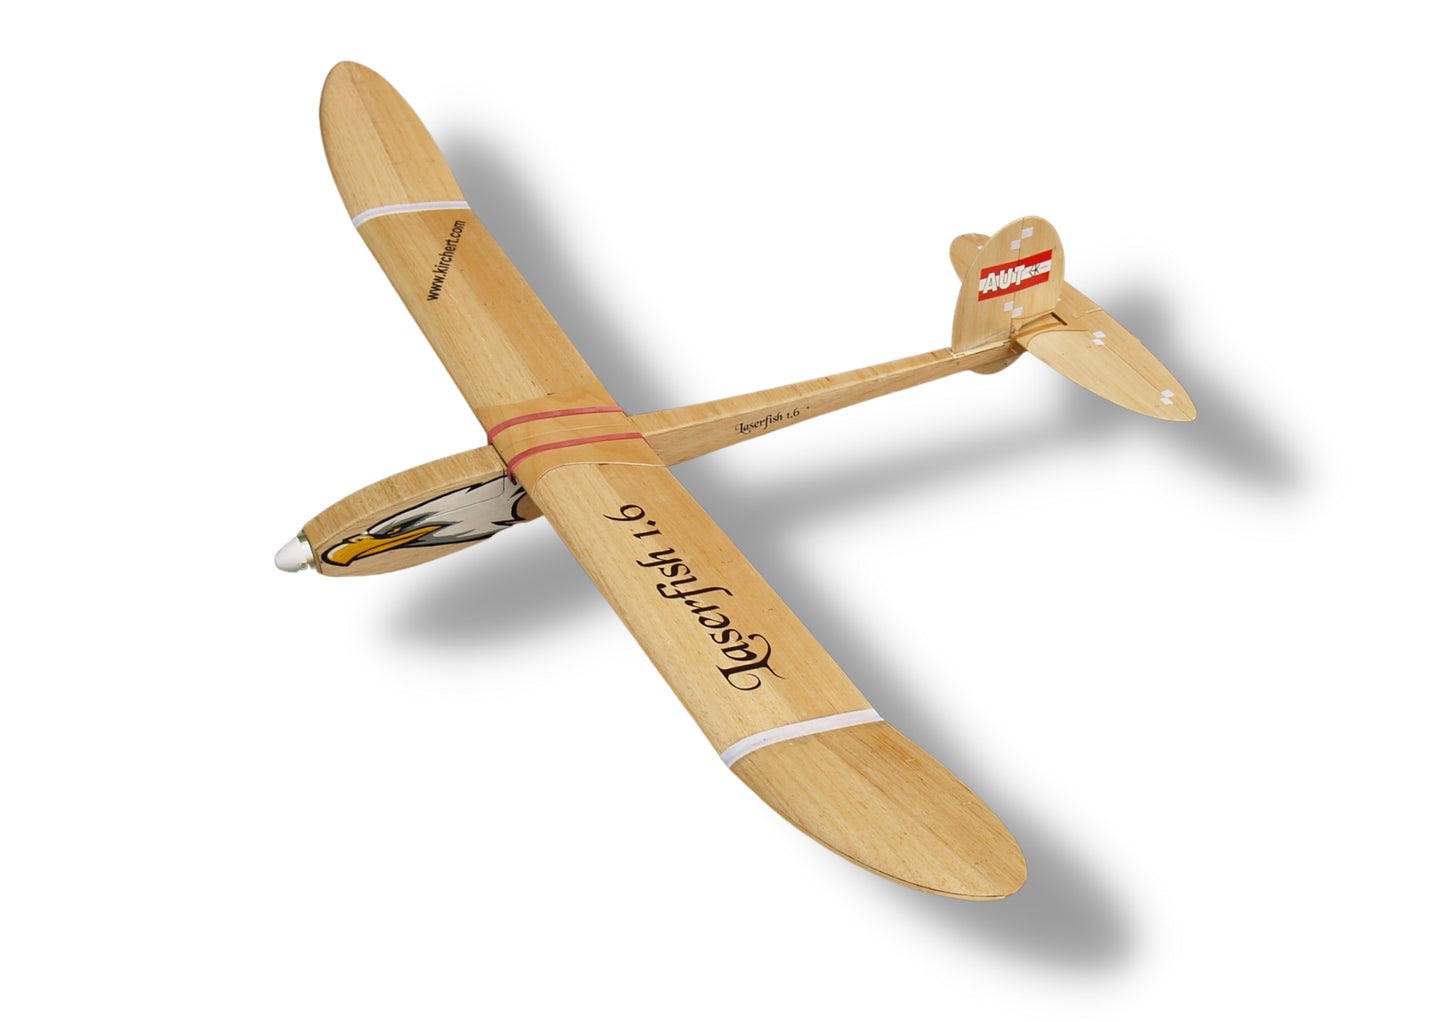 GK Laserfish 1.6, RC-Elektroflugmodell, Bausatz